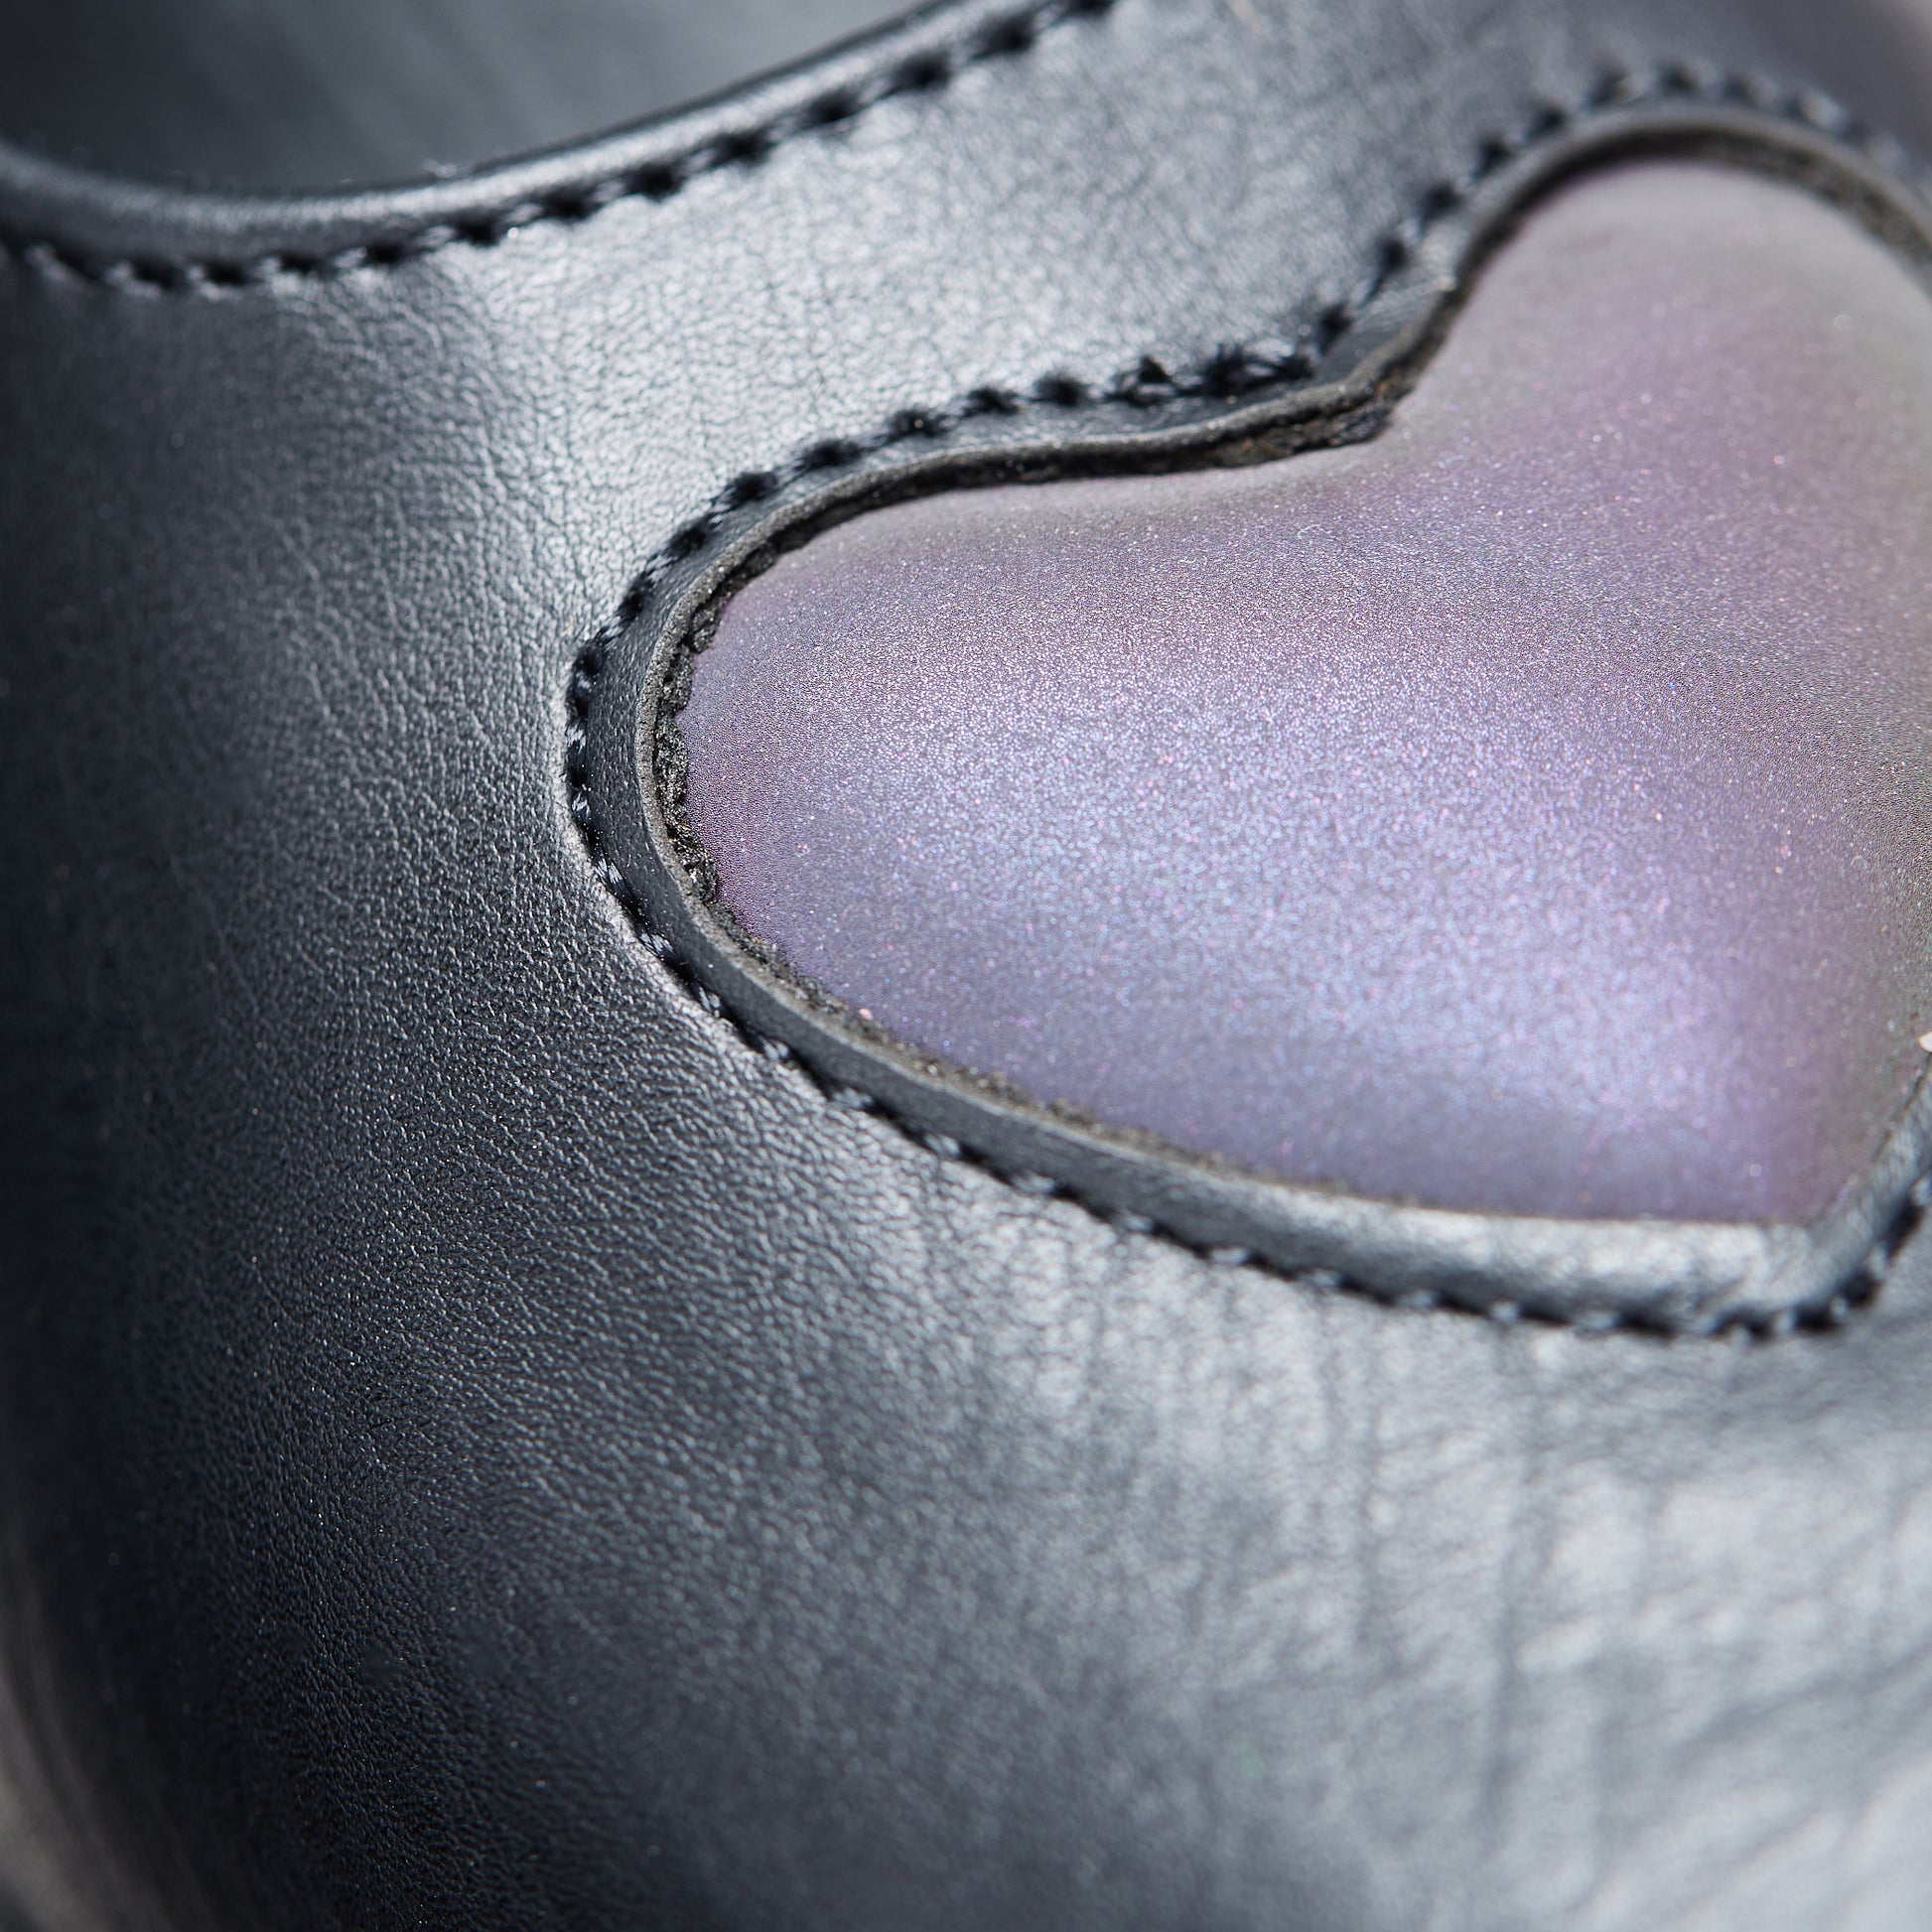 Lovebug Meadow Kidz Mary Jane Shoes - Mary Janes - KOI Footwear - Black - Heart Detail